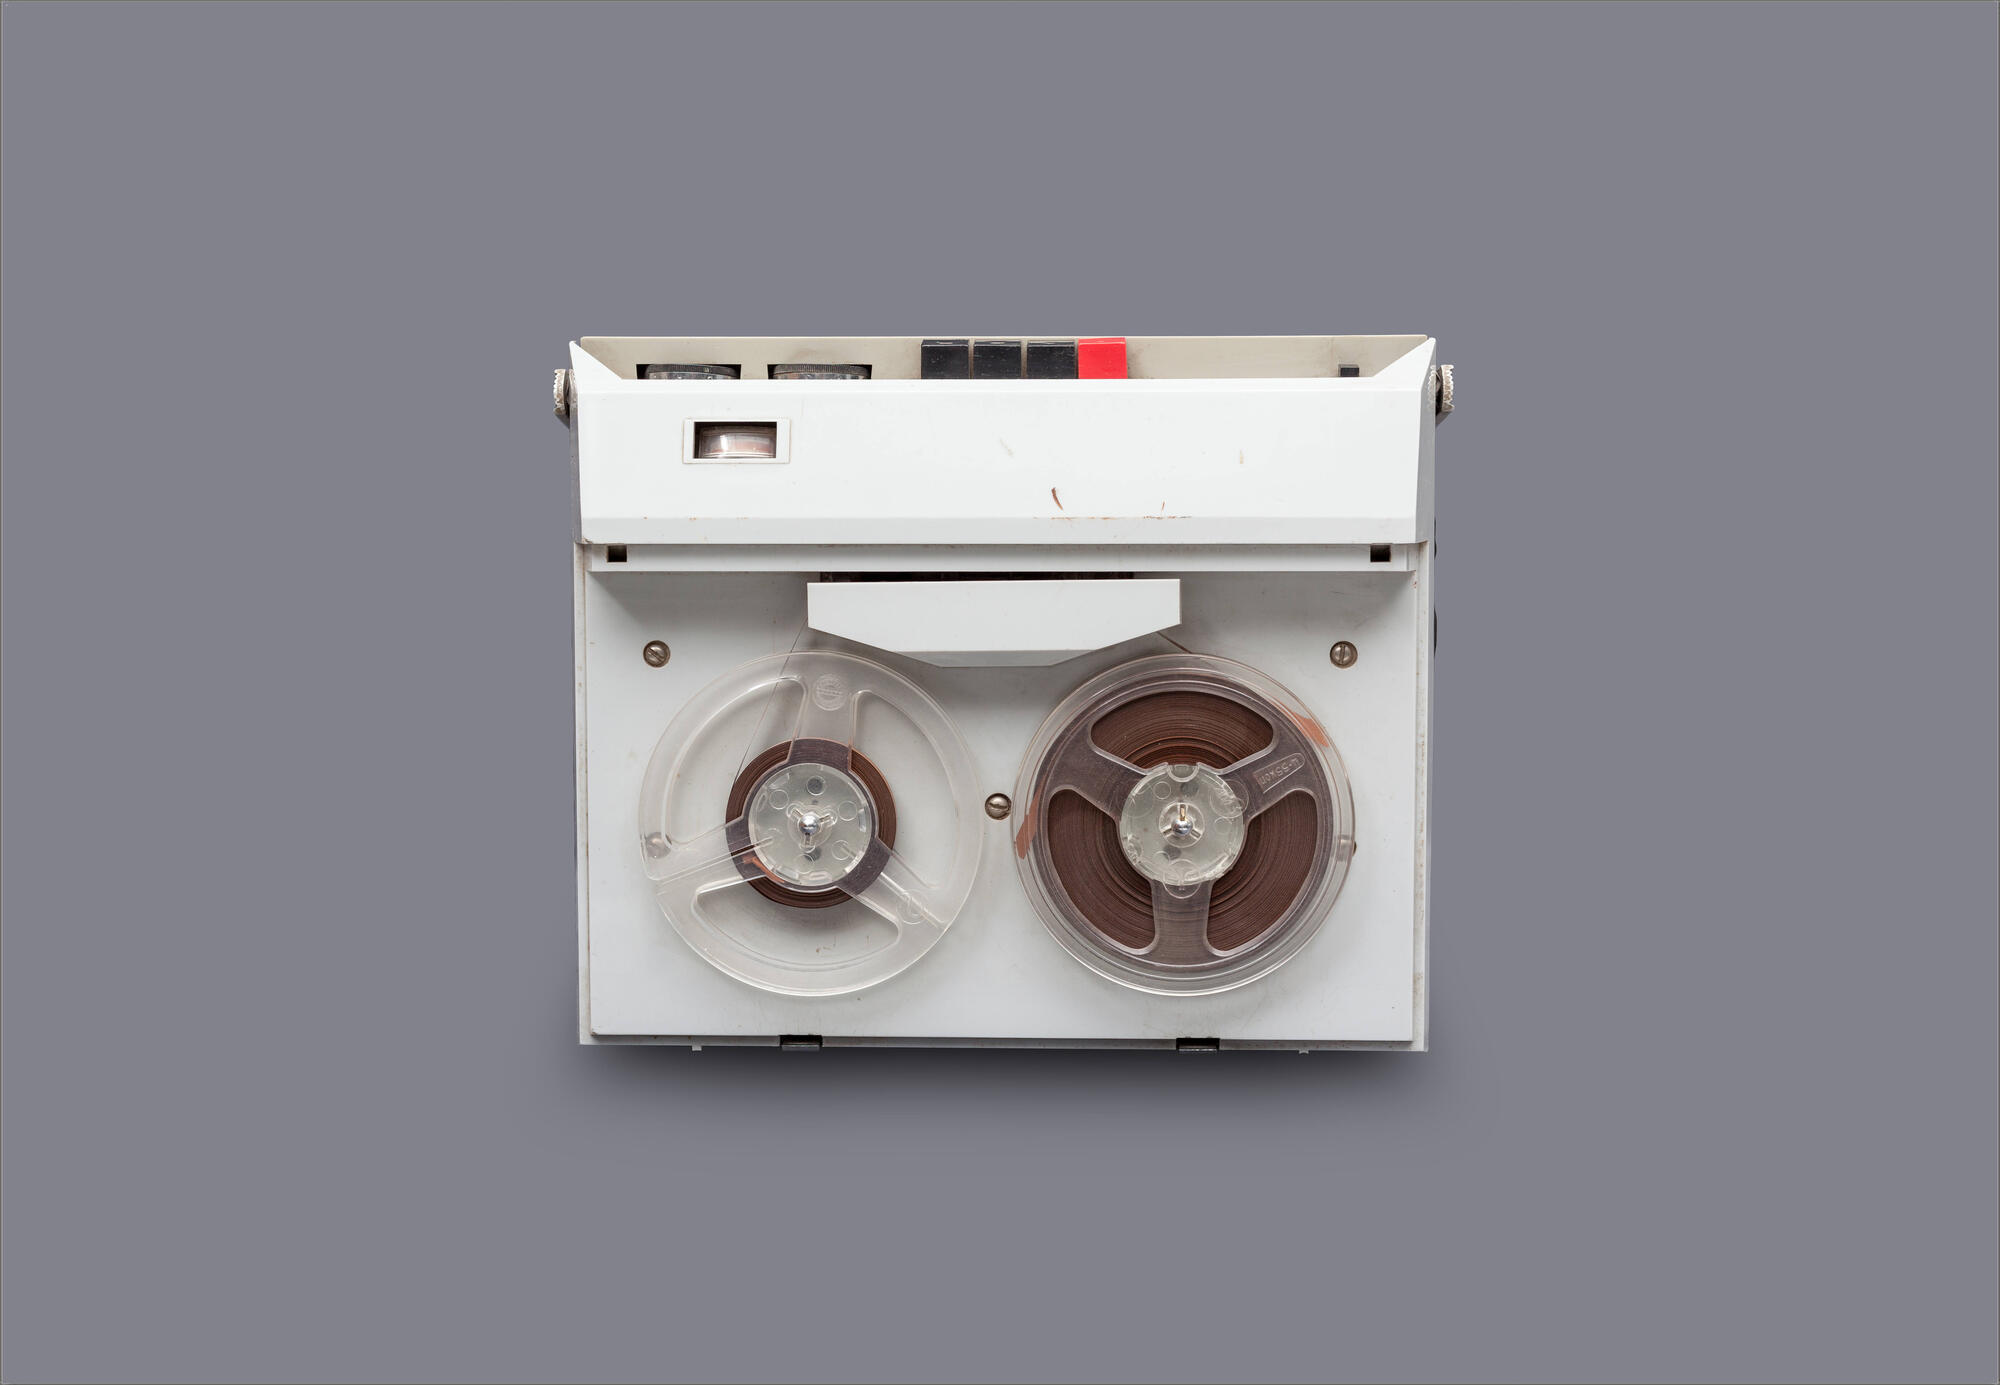 Romantik-3 tape recorder. Подробное описание экспоната, аудиогид